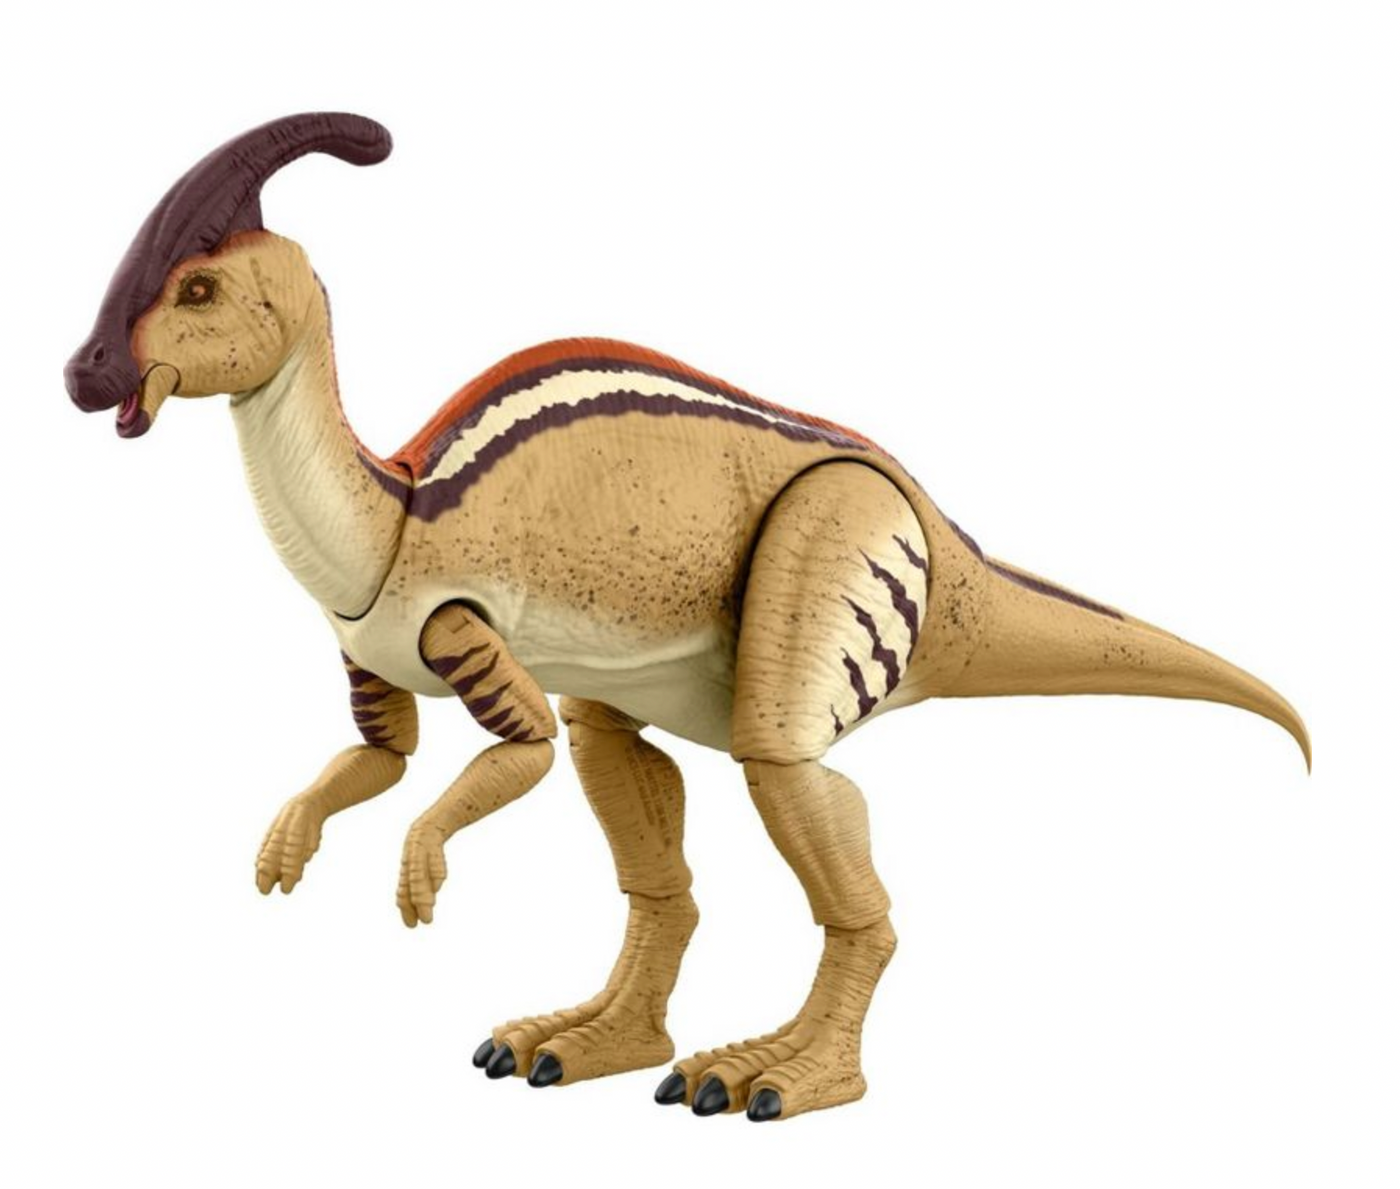 Jurassic World Hammond Collection Parasaurolophus Figure Target Exclusive New